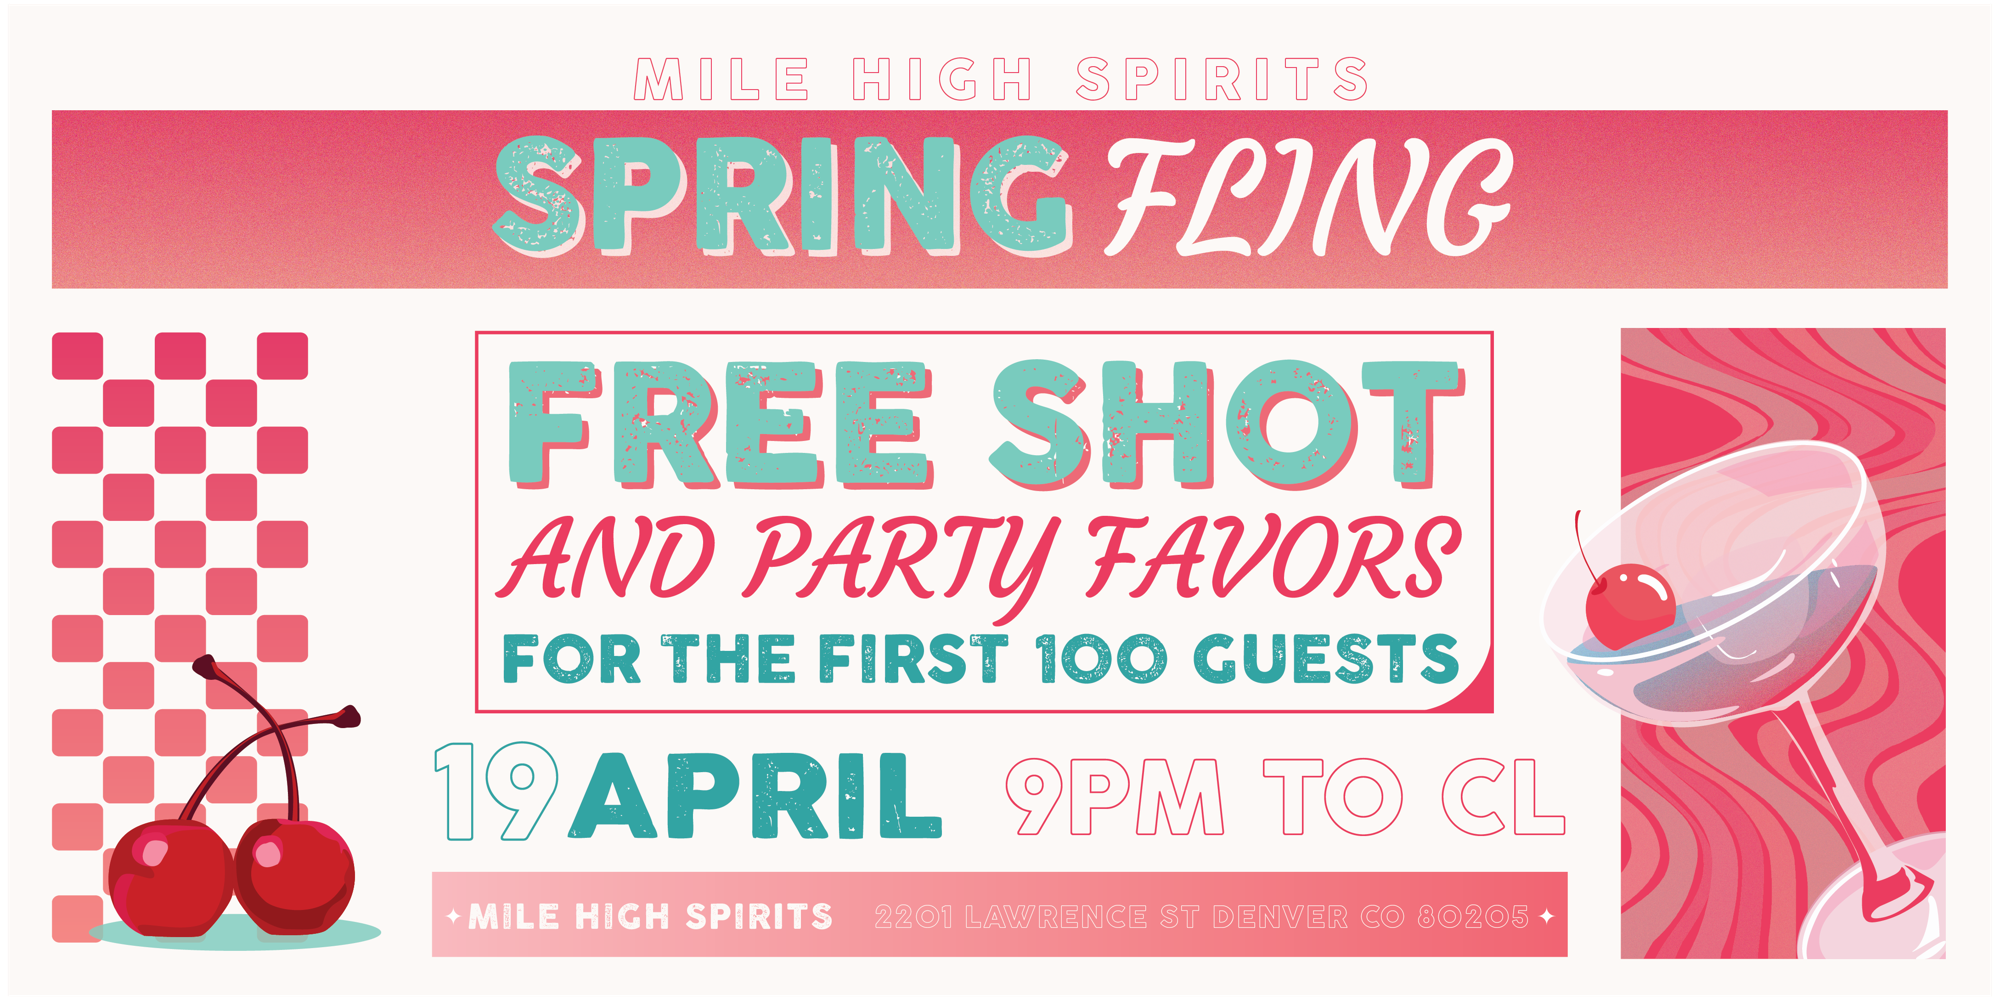 SPRING FLING at Mile High Spirits promotional image